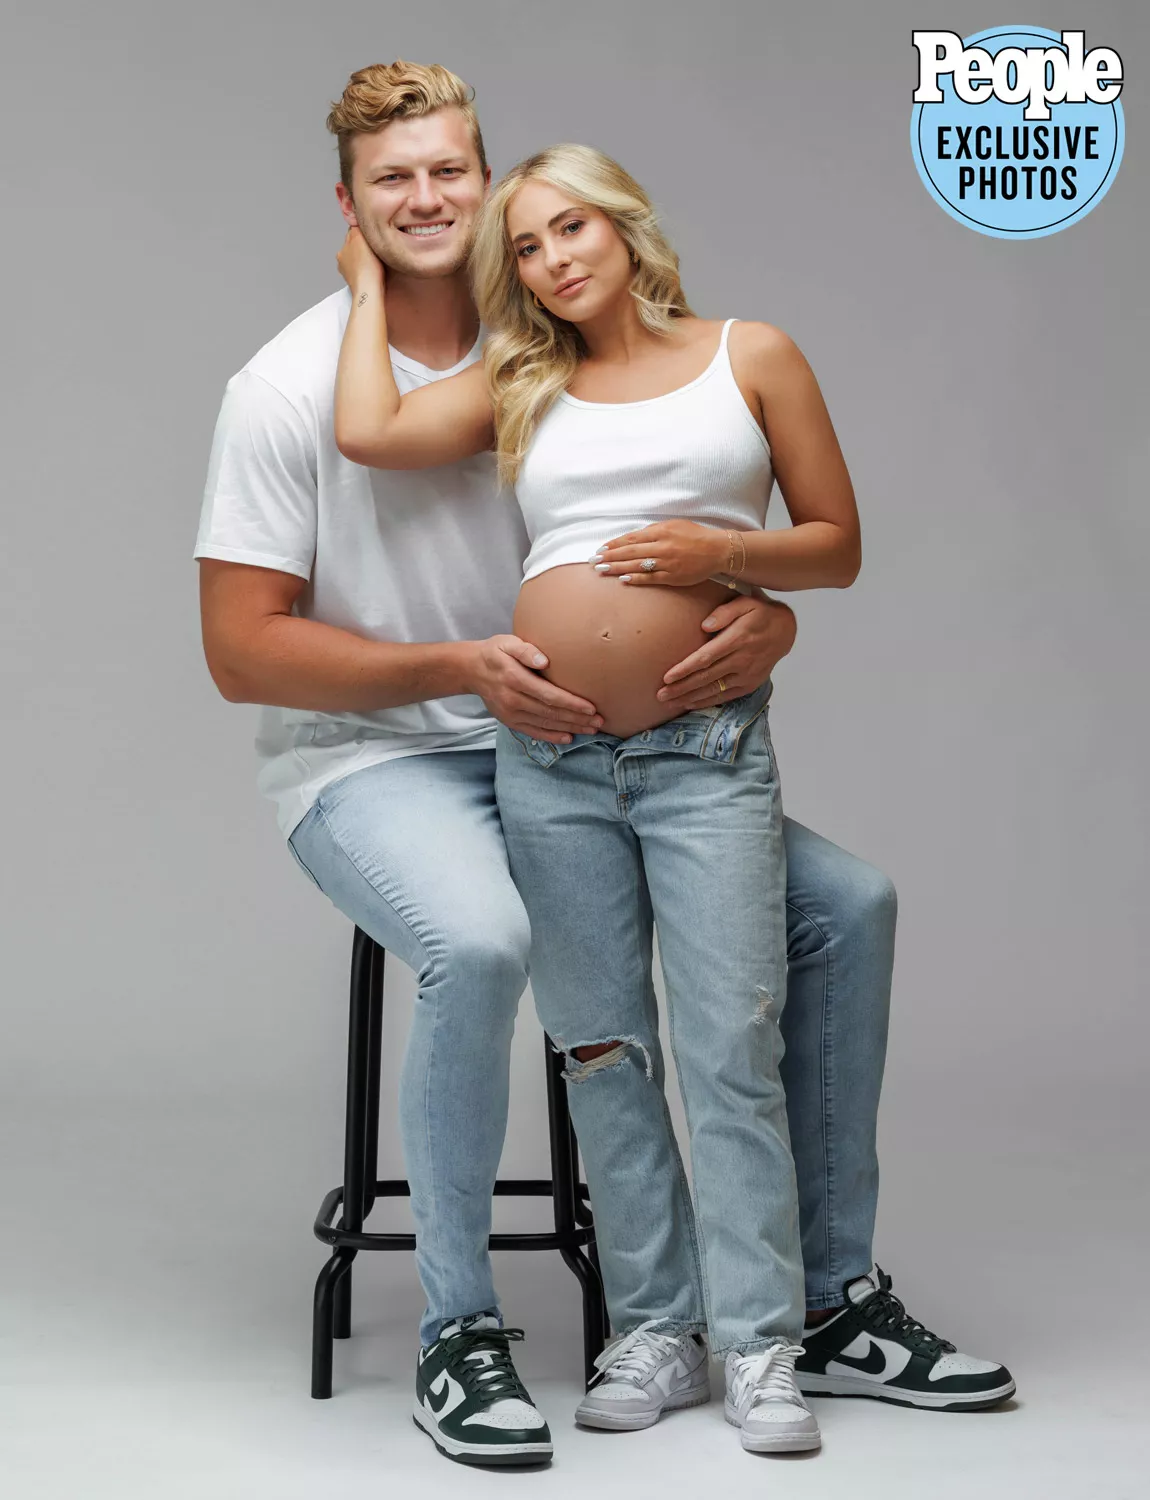 Mykayla Skinner and her husband Jonas Harmer maternity photoshoot with Beka Price Photography